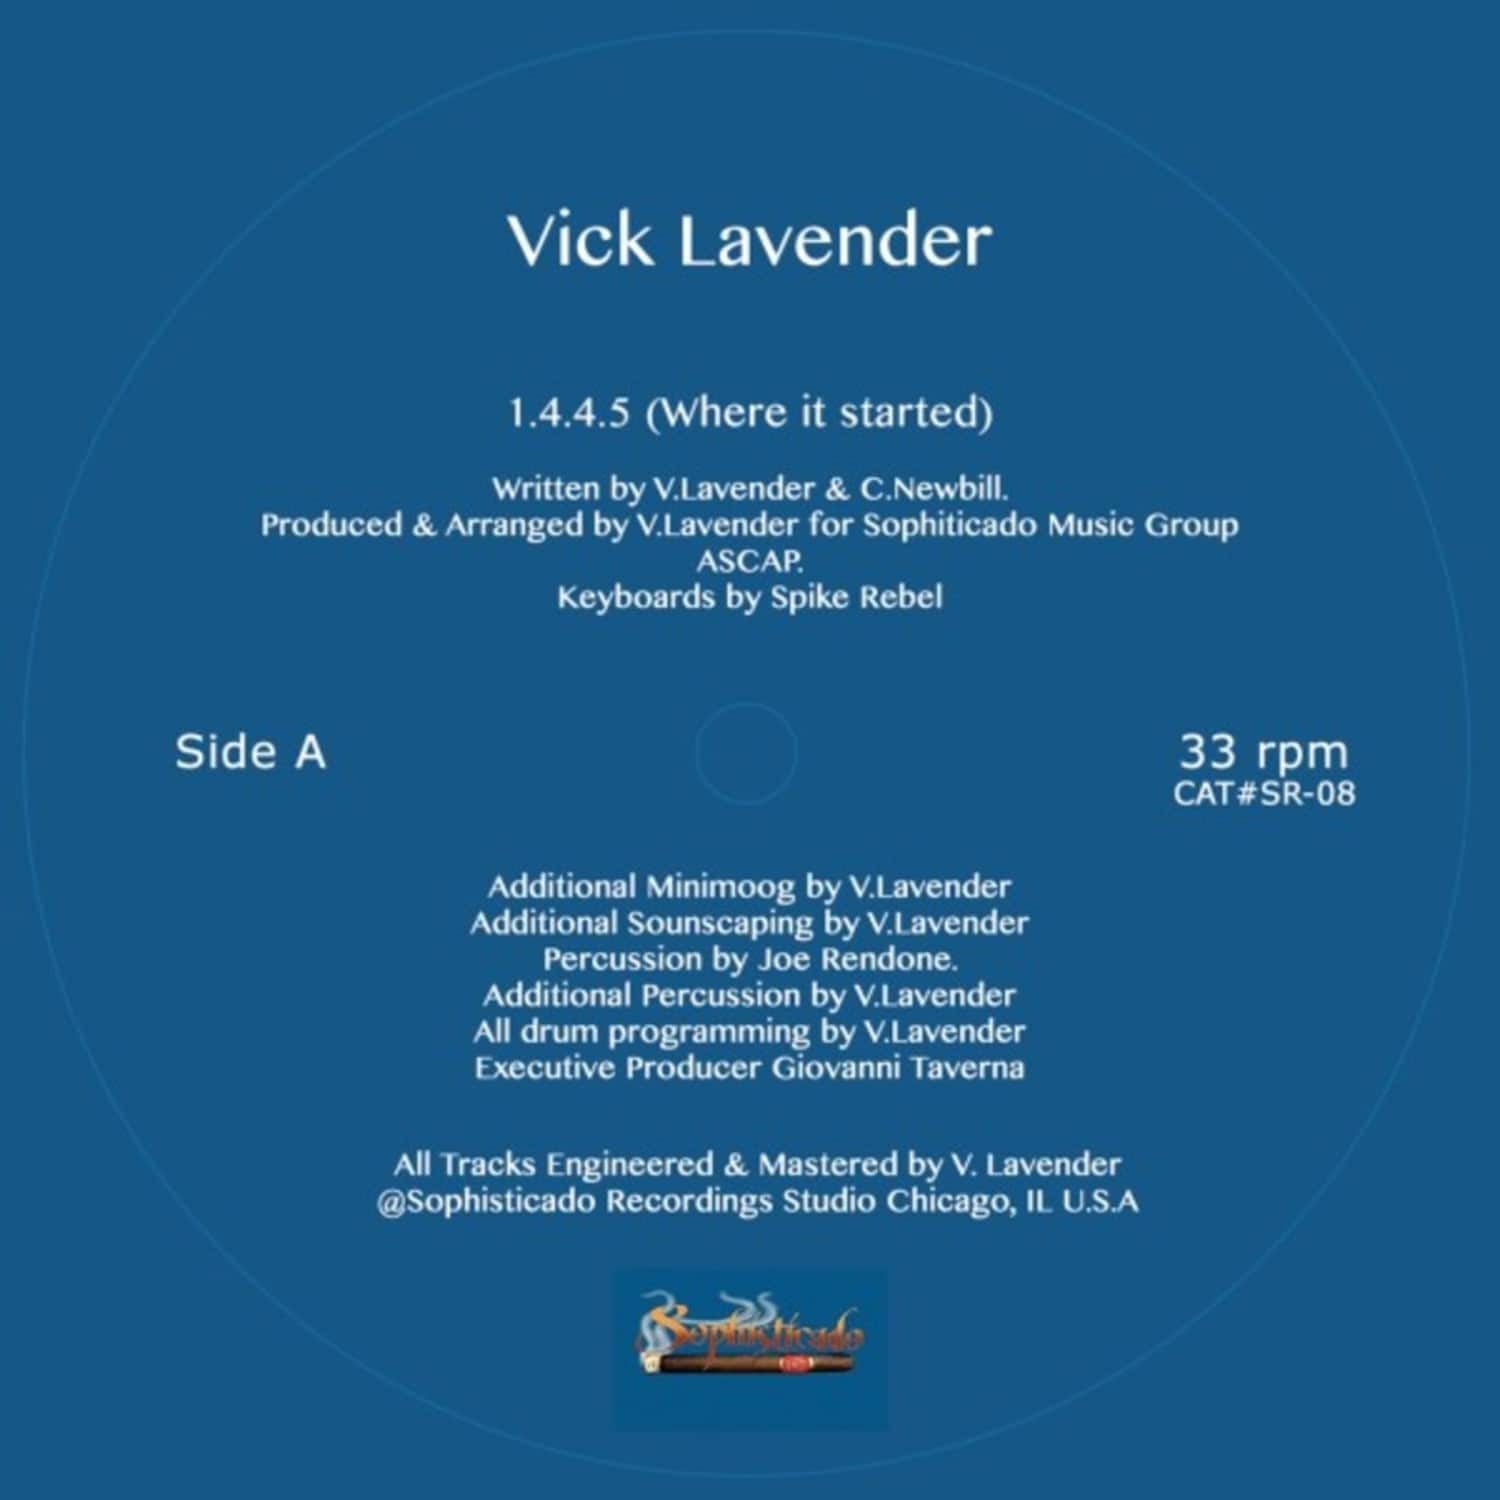 Vick Lavender - 1.4.4.5